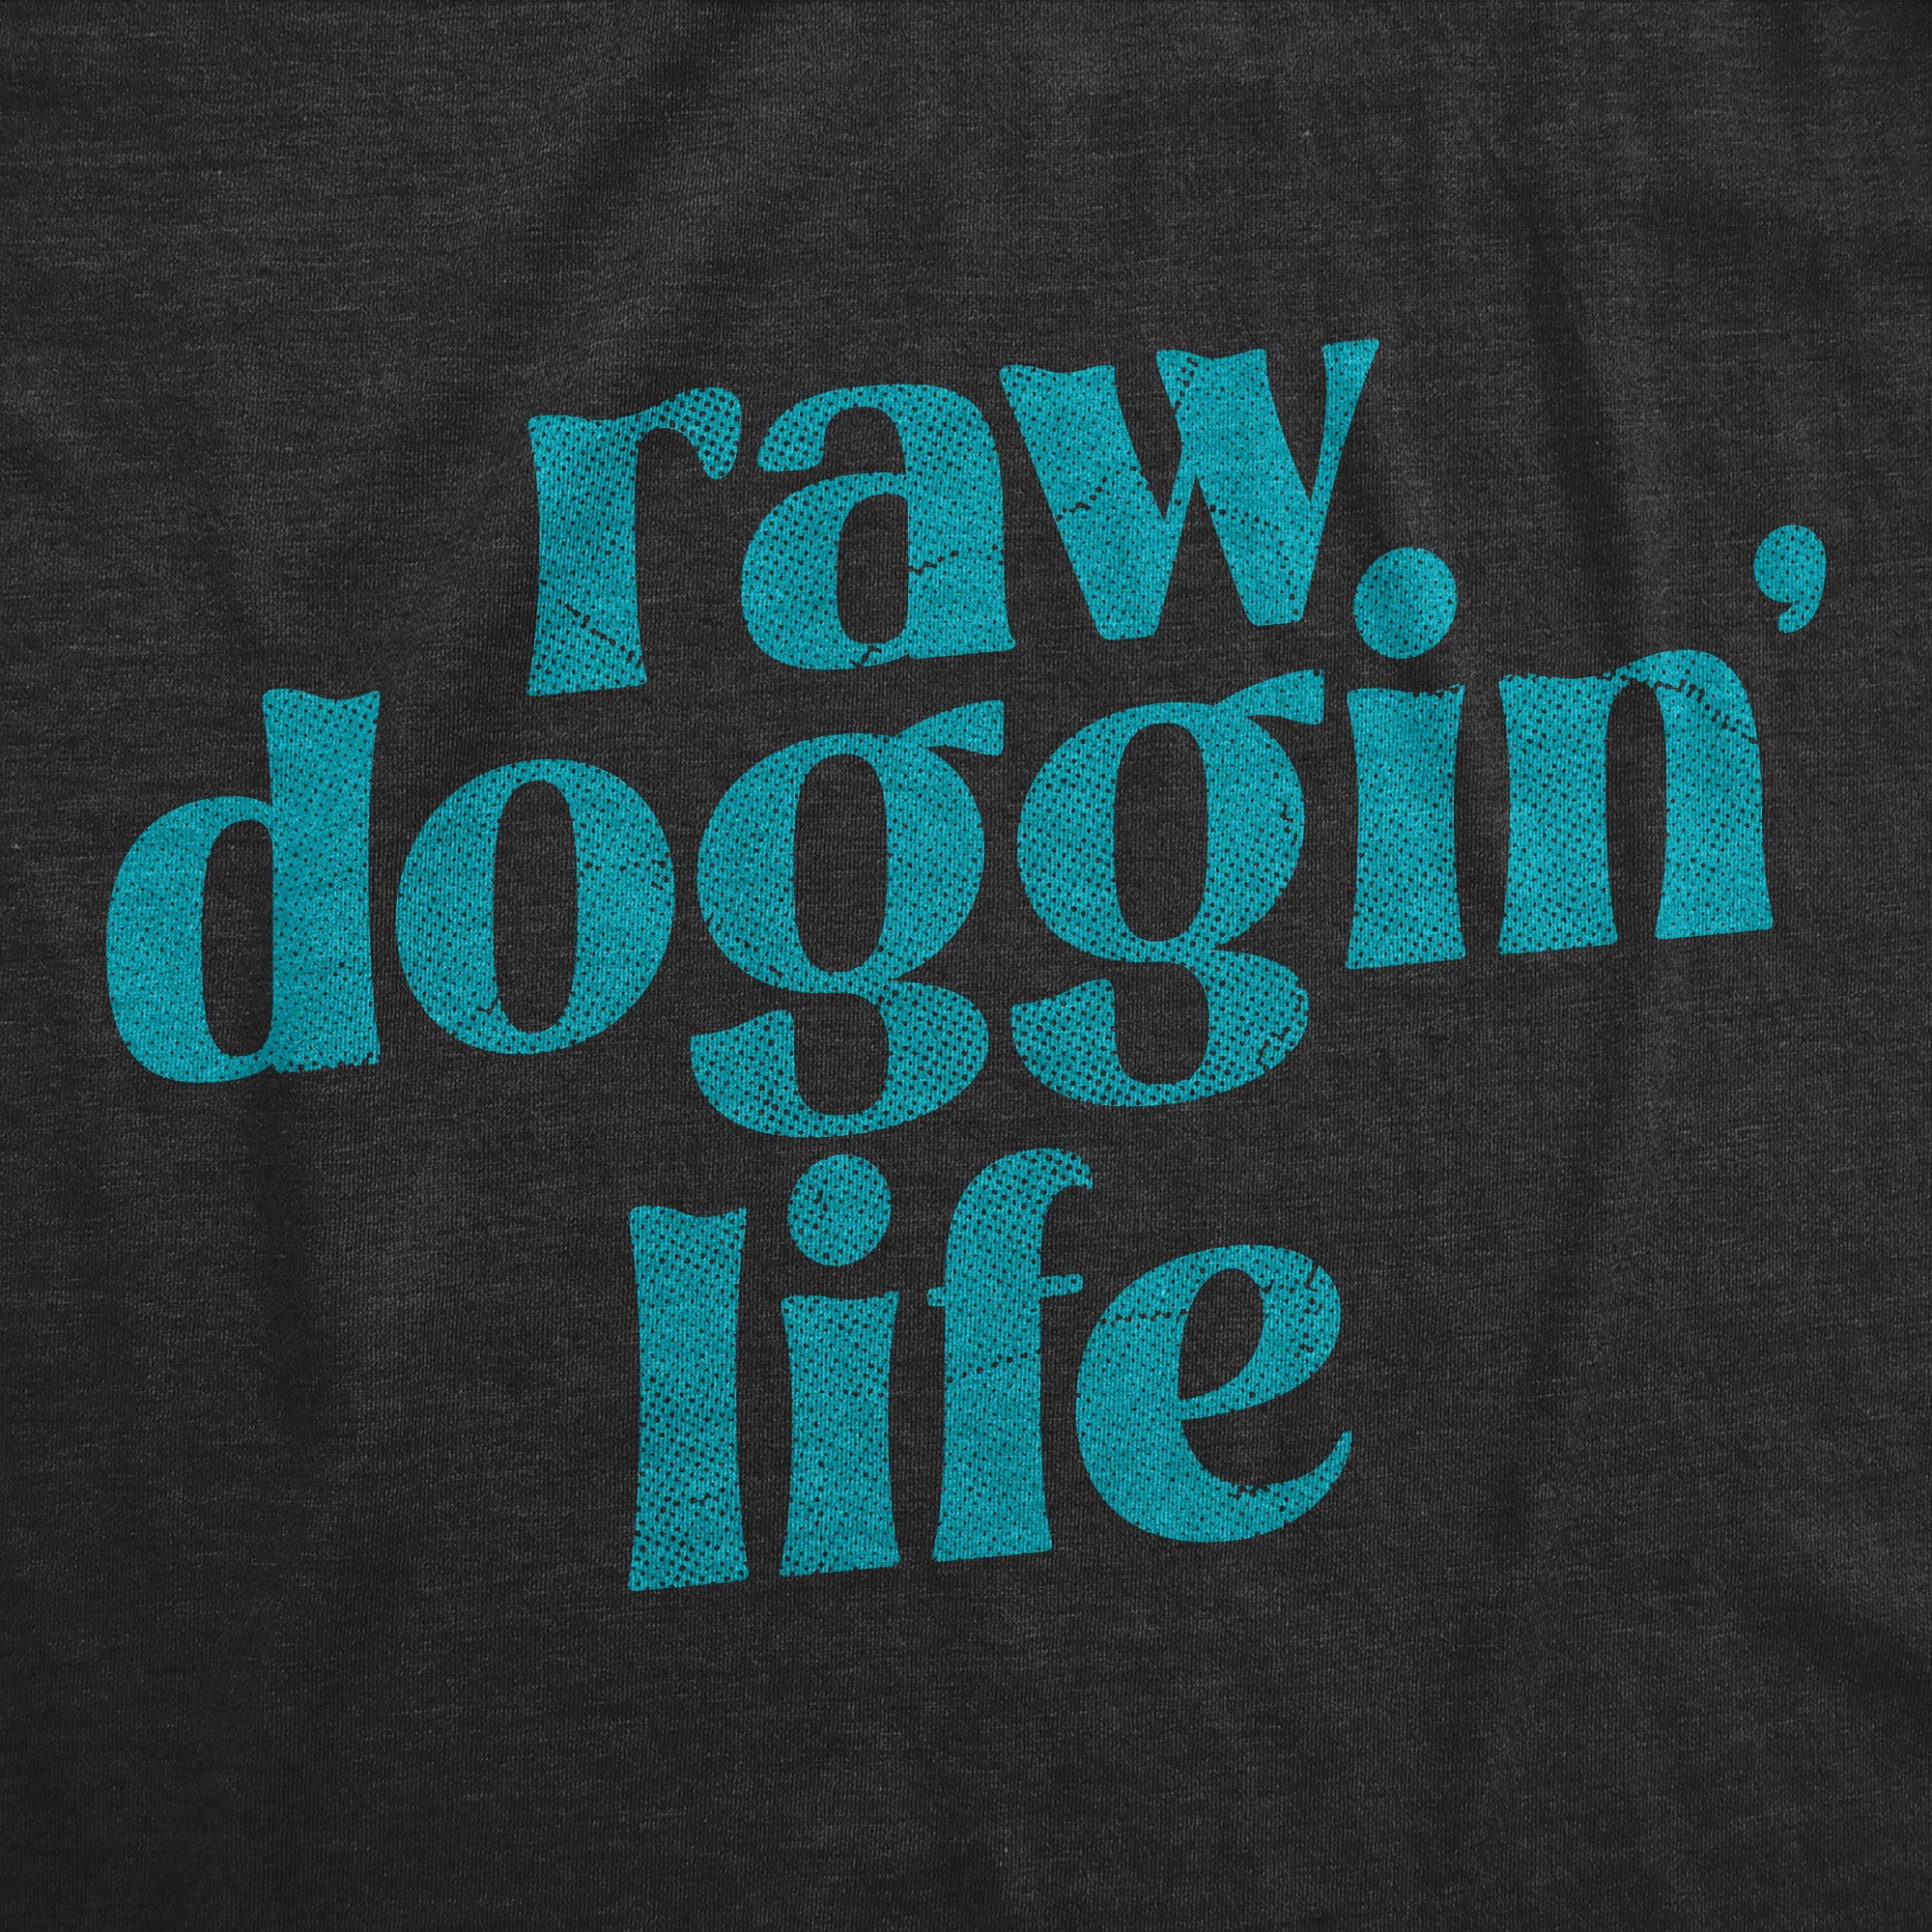 Funny Heather Black - RAW Raw Doggin Life Mens T Shirt Nerdy sex sarcastic Tee